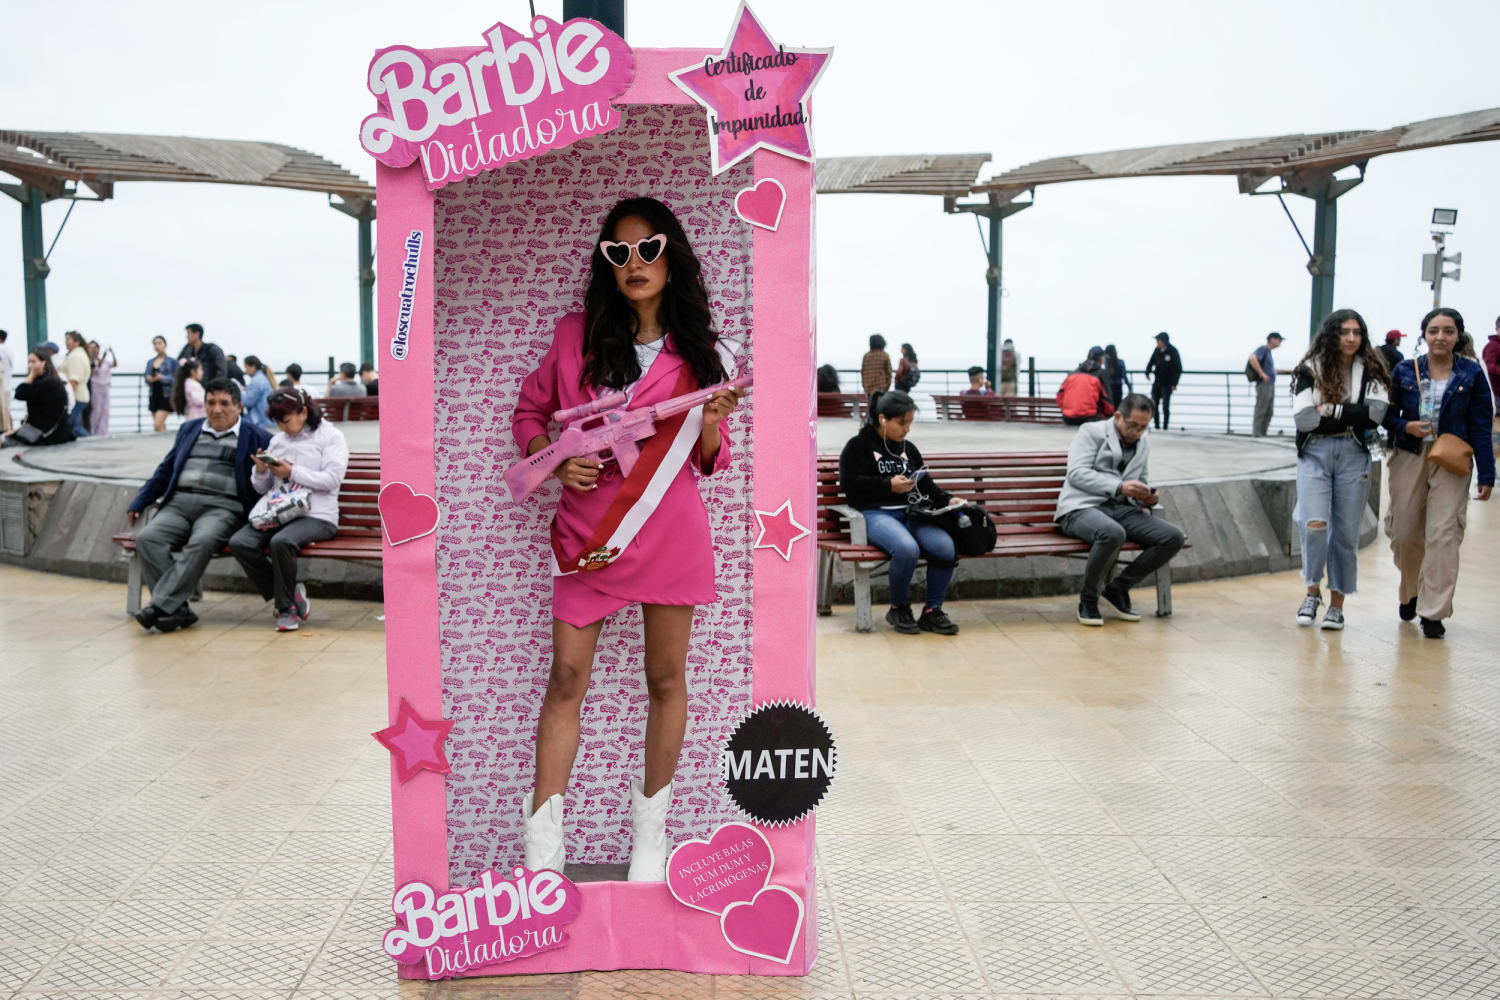 Global retailers cash in on Barbie movie craze